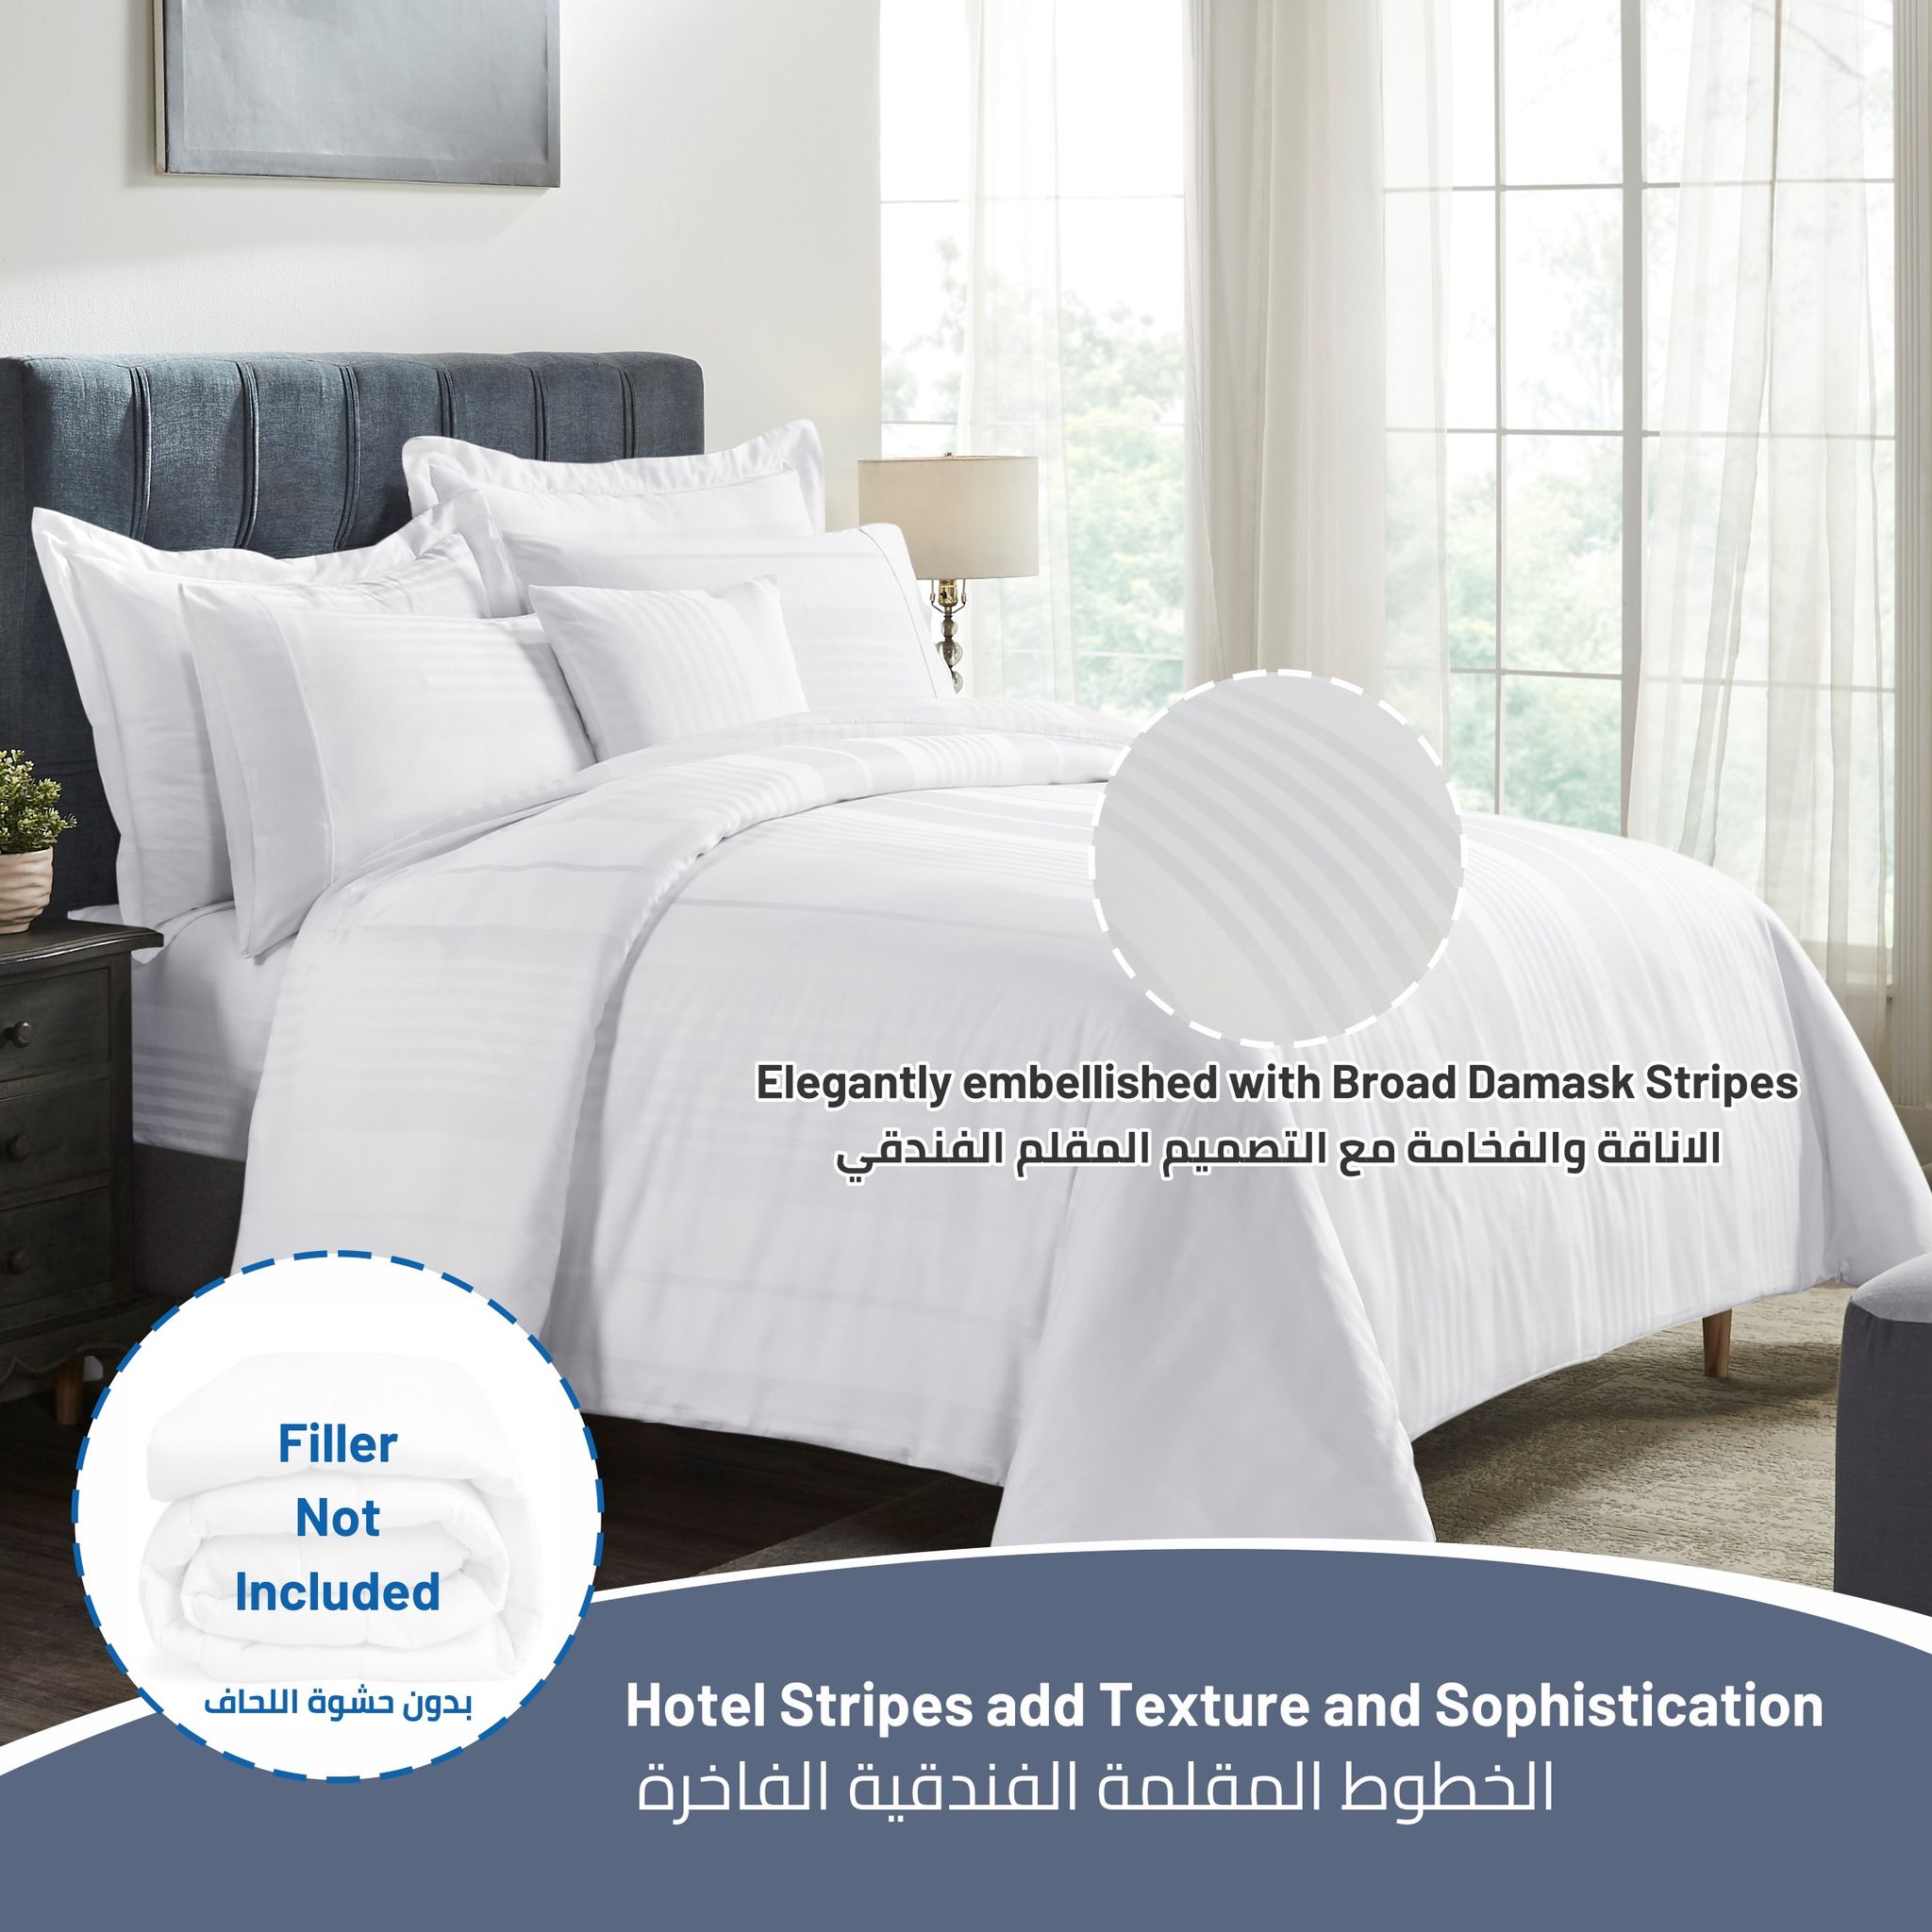 Hotel Style 7-Pcs King Size Bedding Set 300TC Cotton Rich Stripe Bedding Duvet Set With Bed Quilt Cover/Duvet Cover & Corner Ties,White